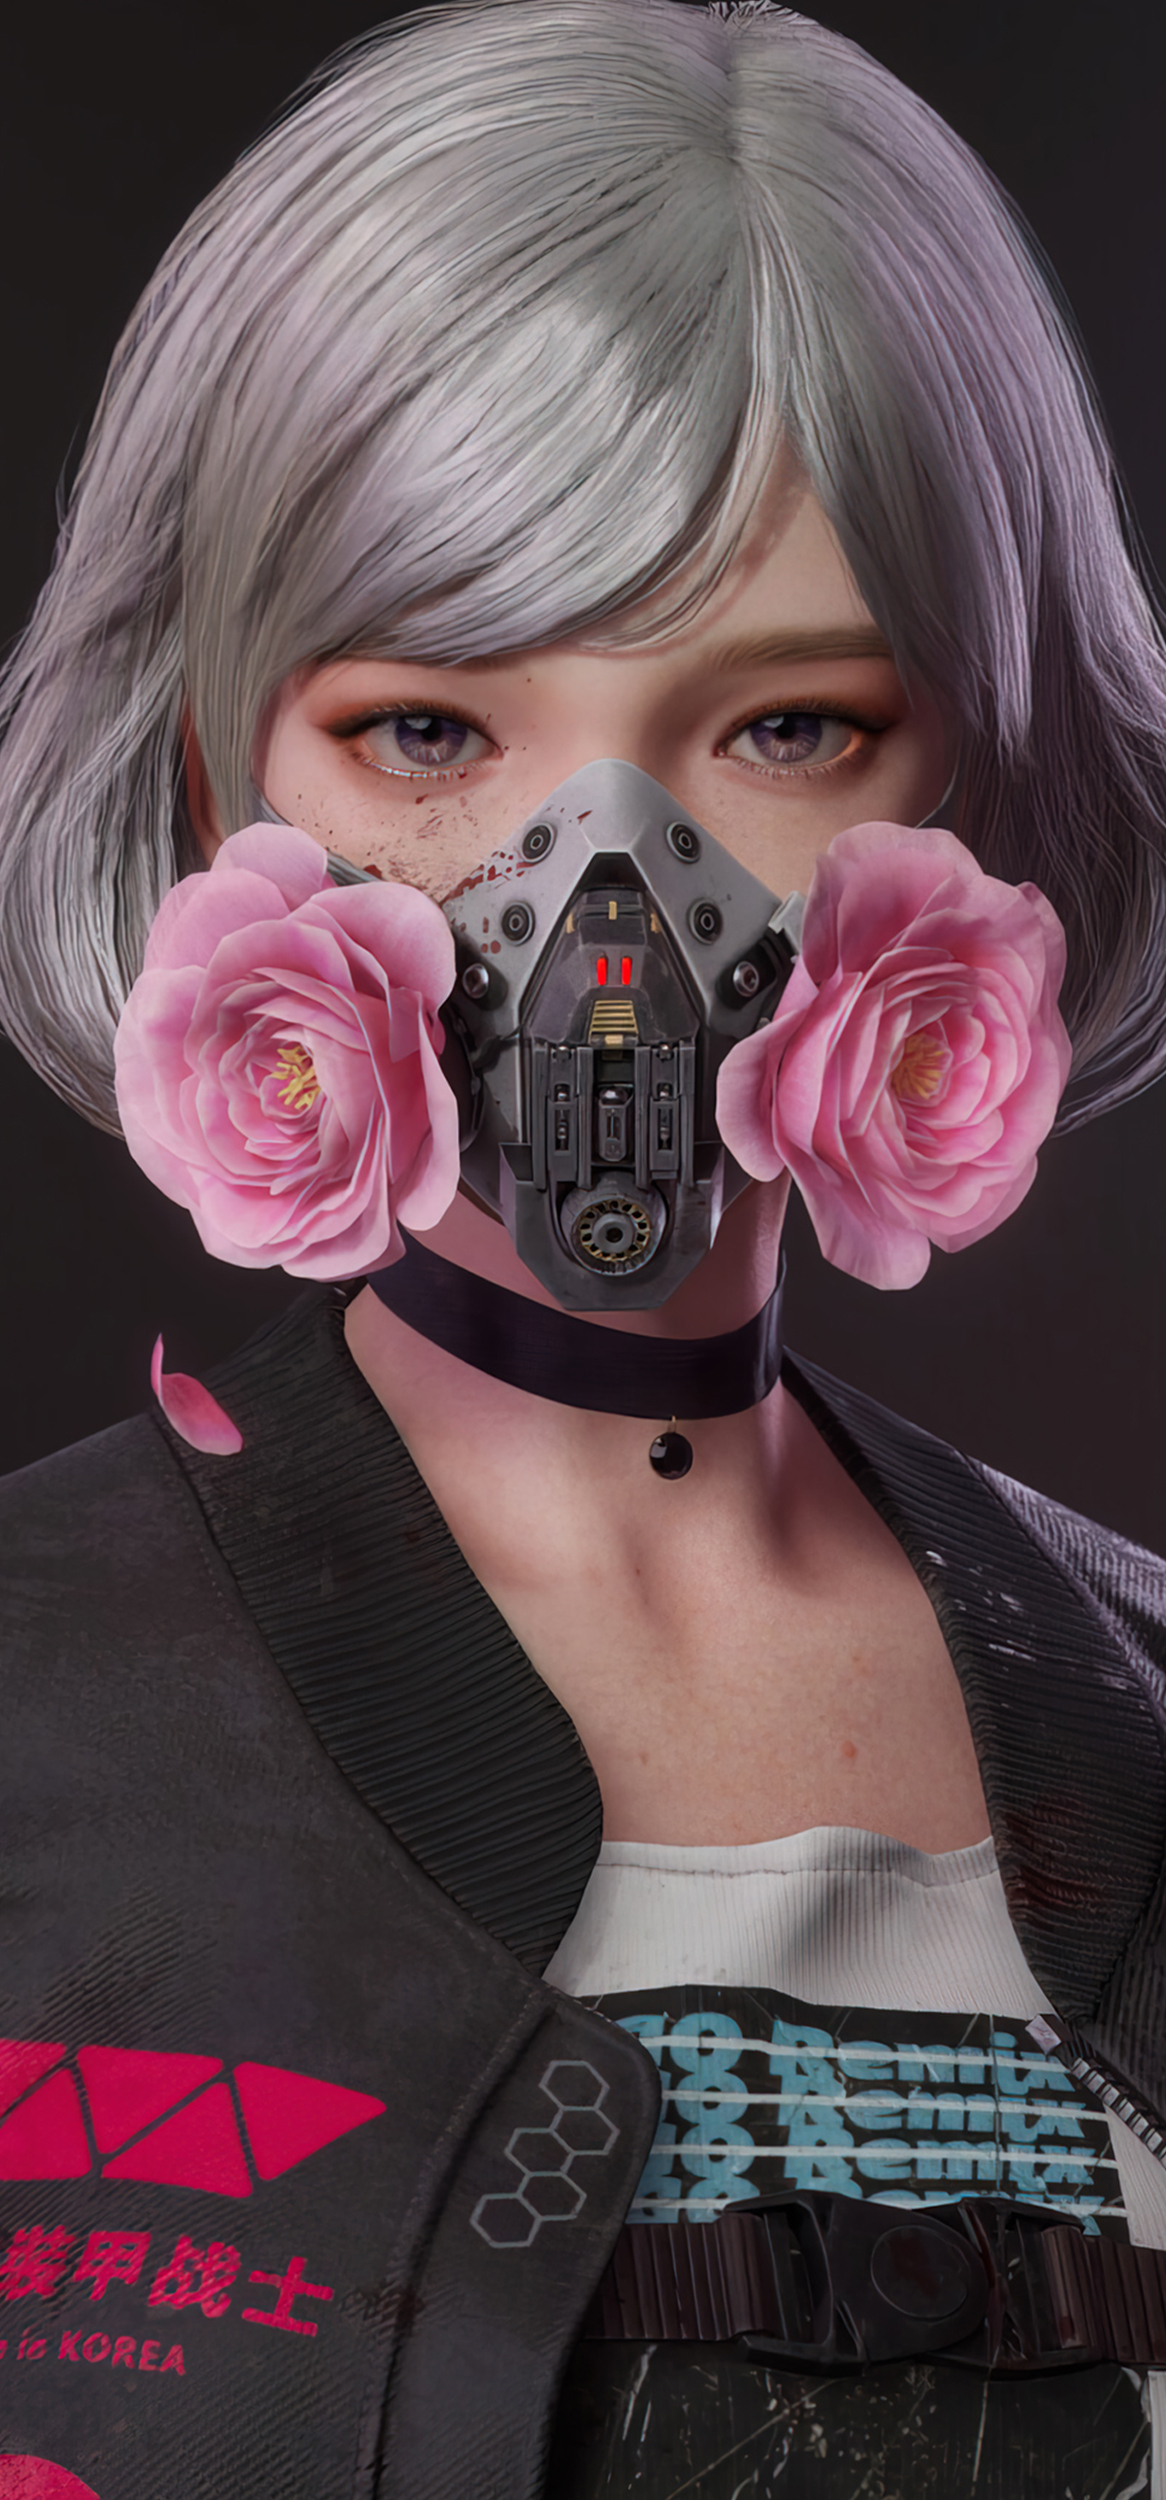 Girl Wearing Mask Cyberpunk Wallpapers